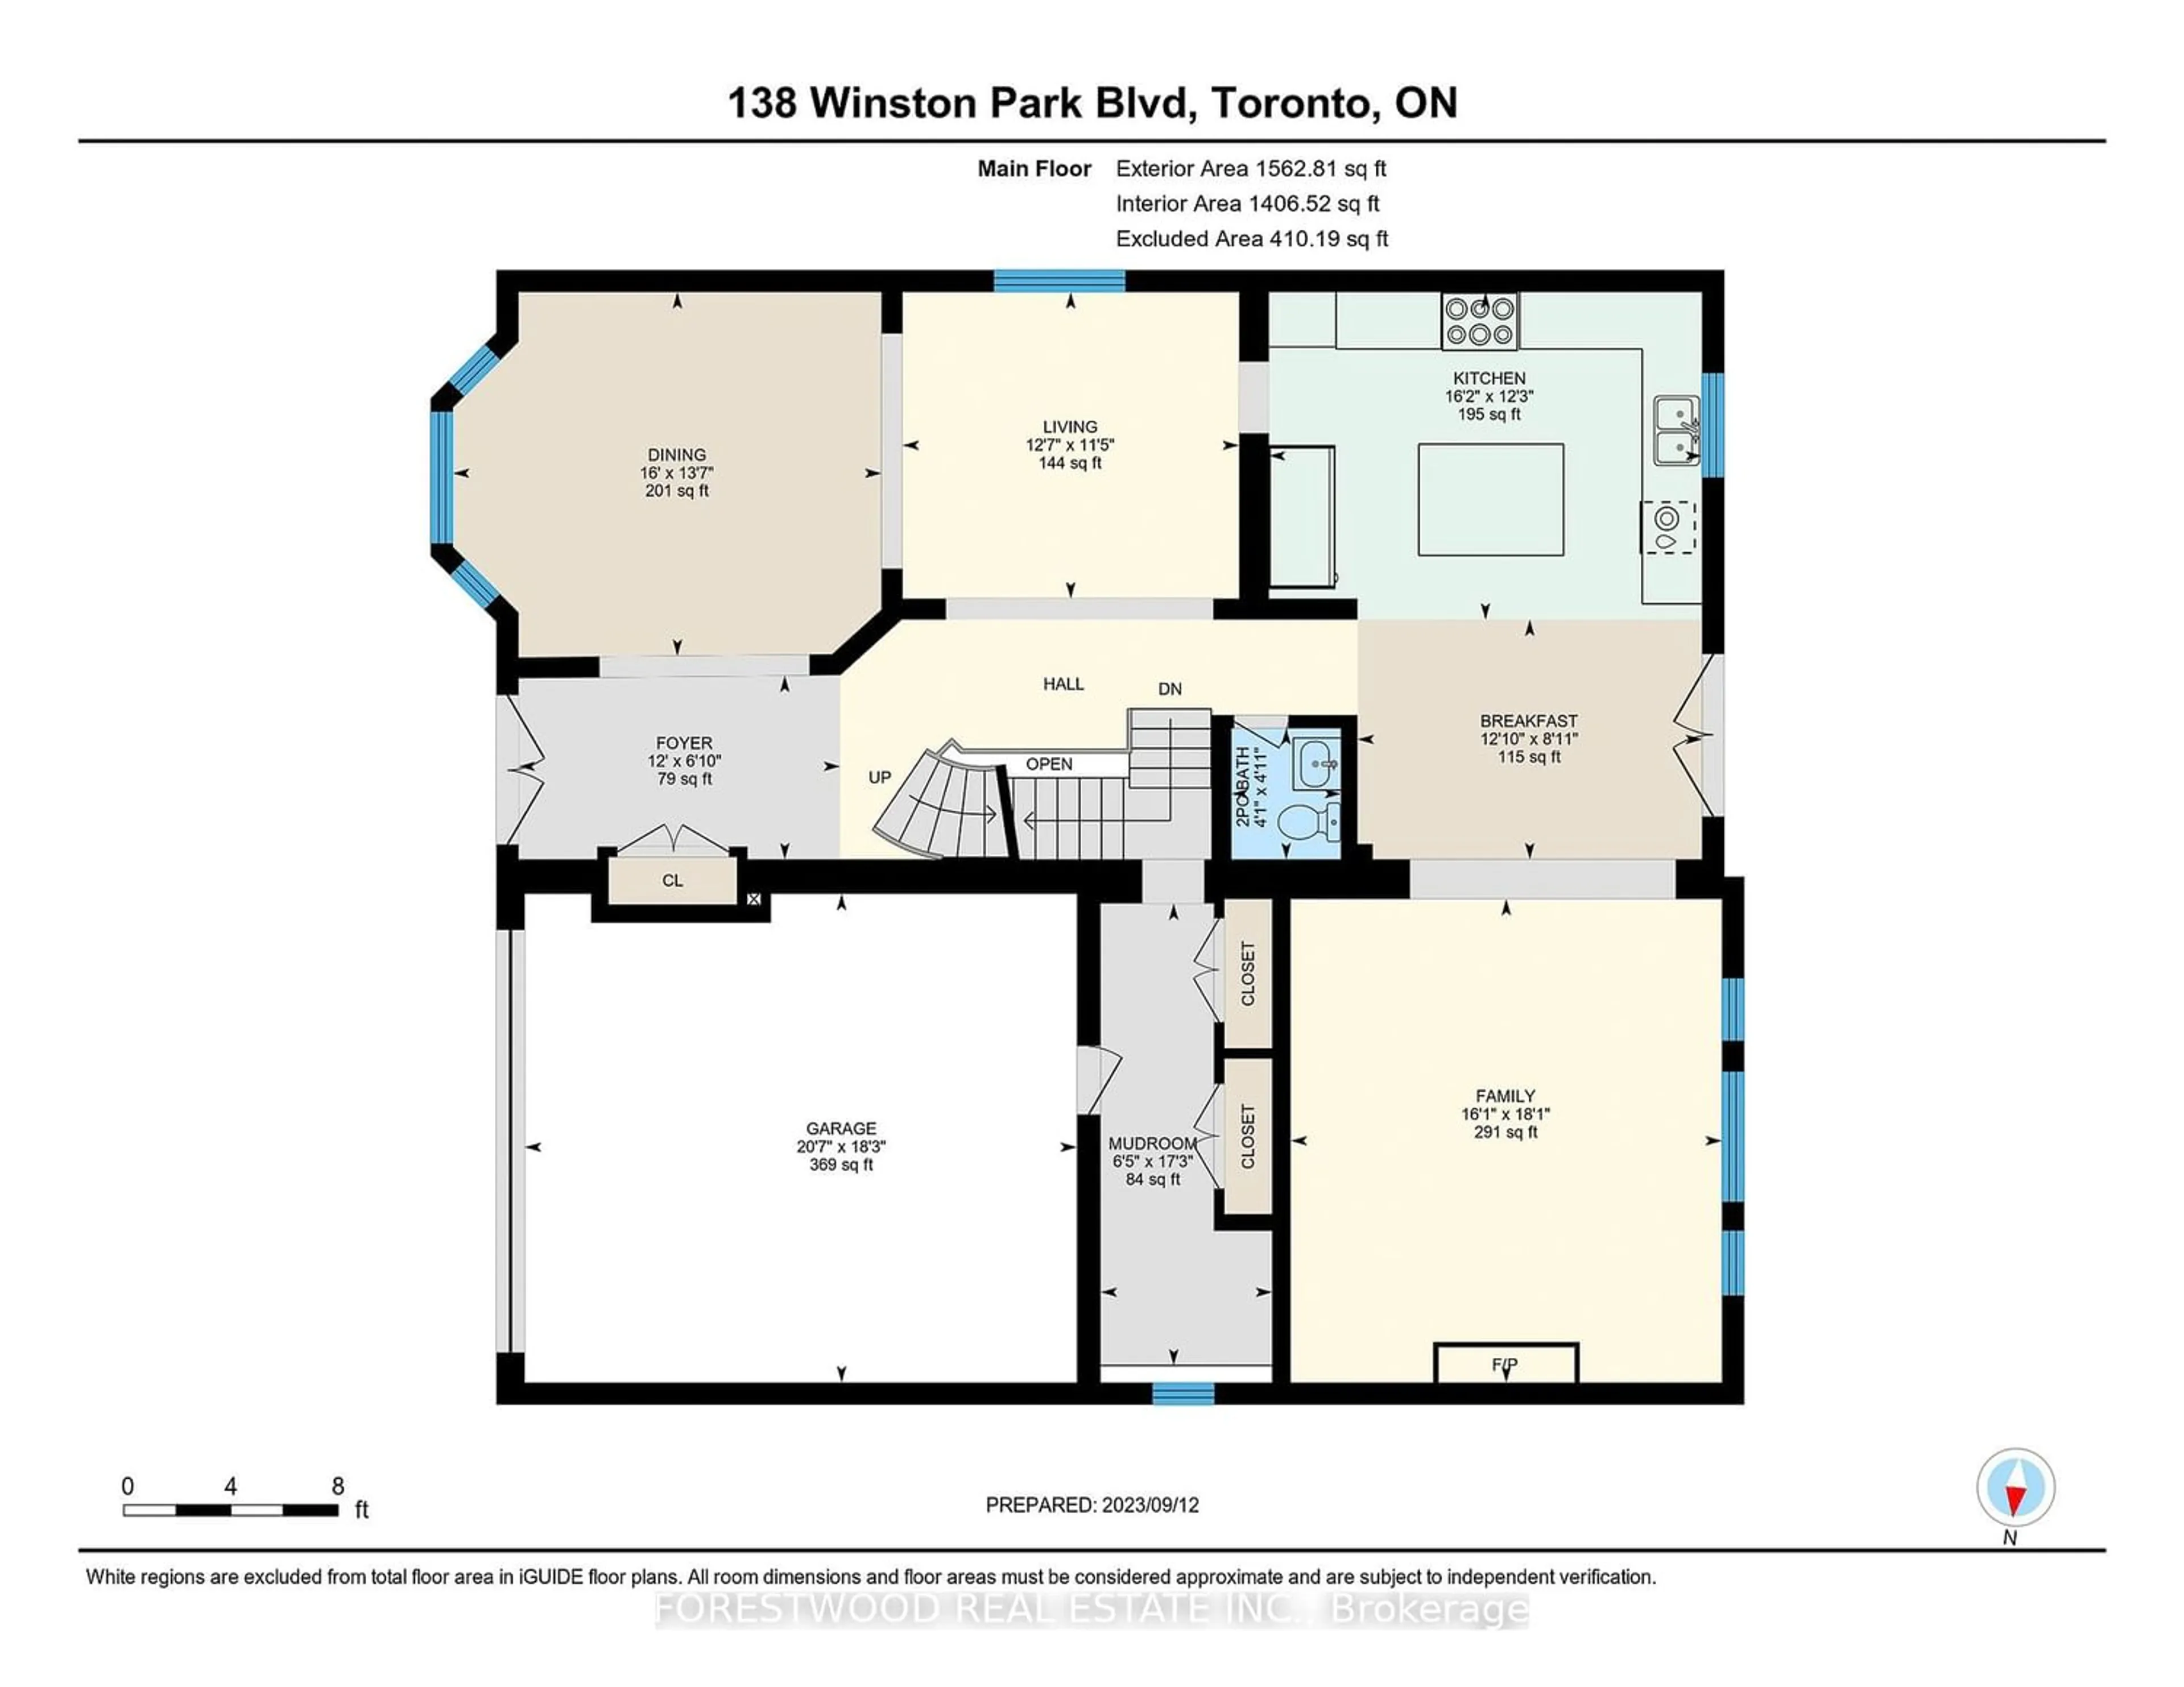 Floor plan for 138 Winston Park Blvd, Toronto Ontario M3K 1C5